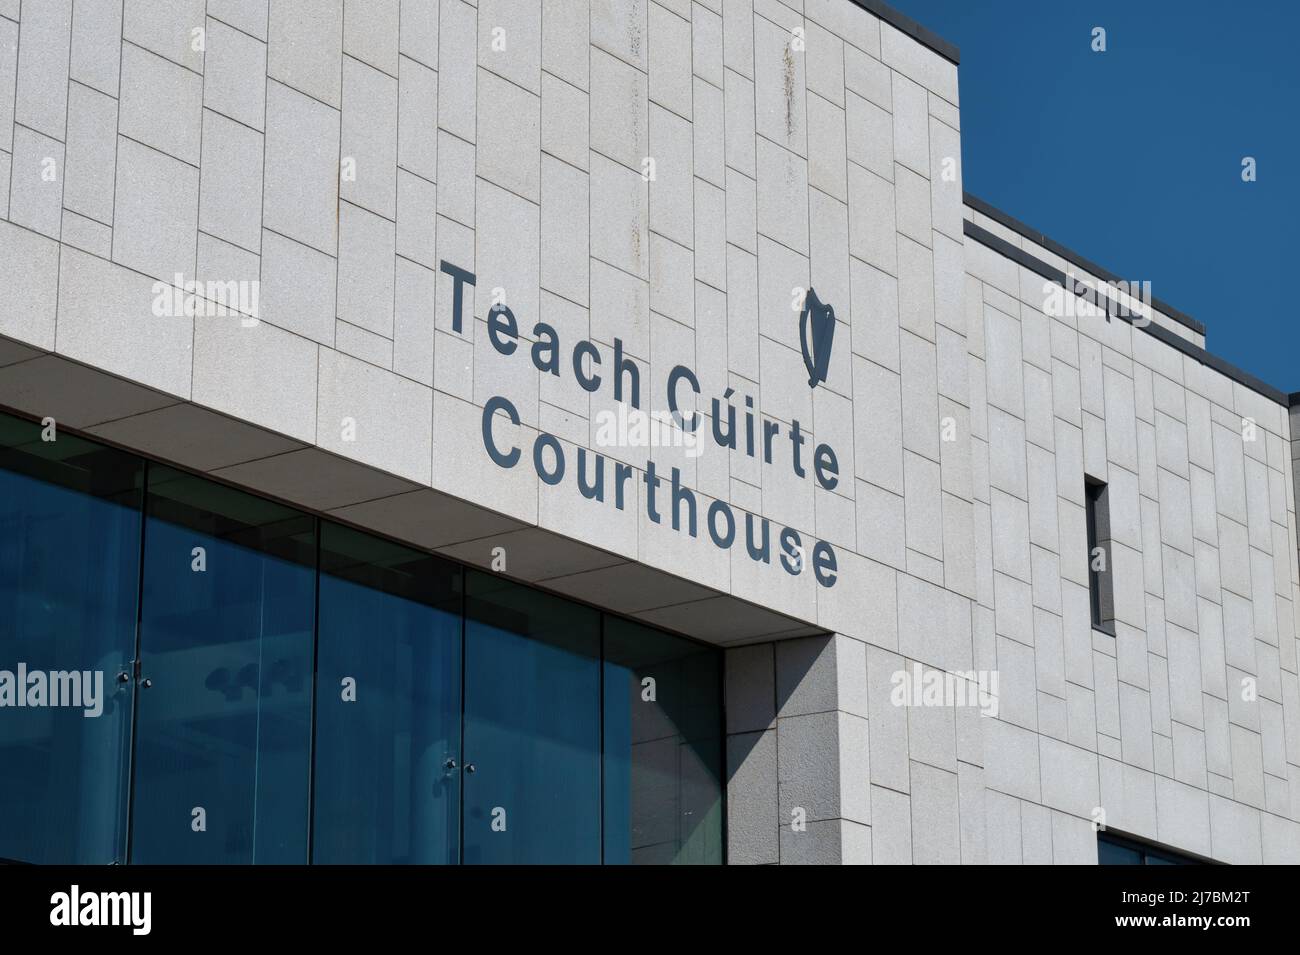 Kilkenny, Ireland- April 20, 2022: The sign for Teach Cuirte Courthouse in Kilkenny Ireland. Stock Photo